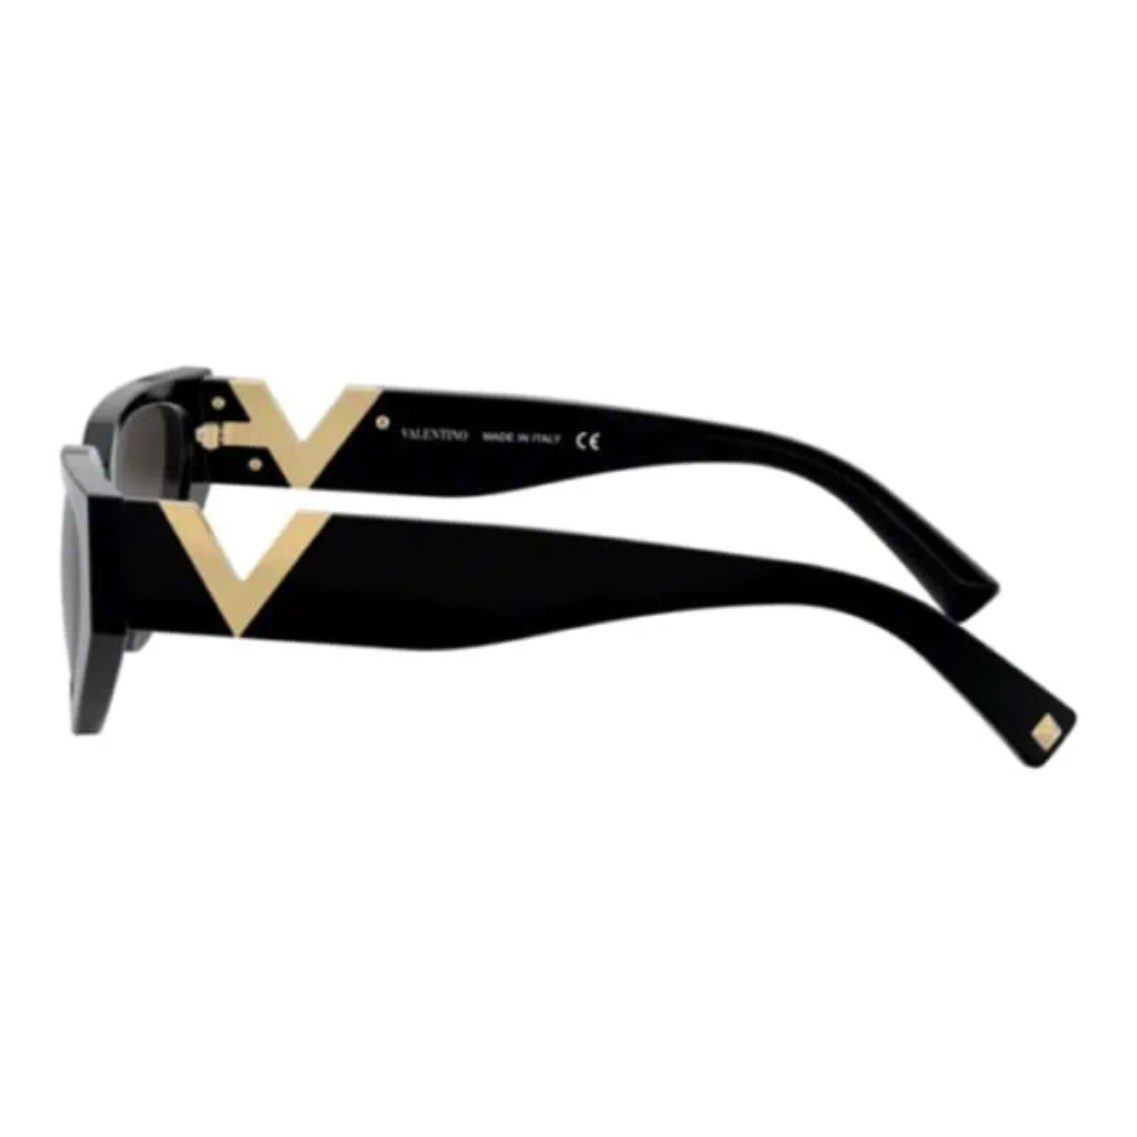 Valentino / Black & Gold Cateye Sunglasses